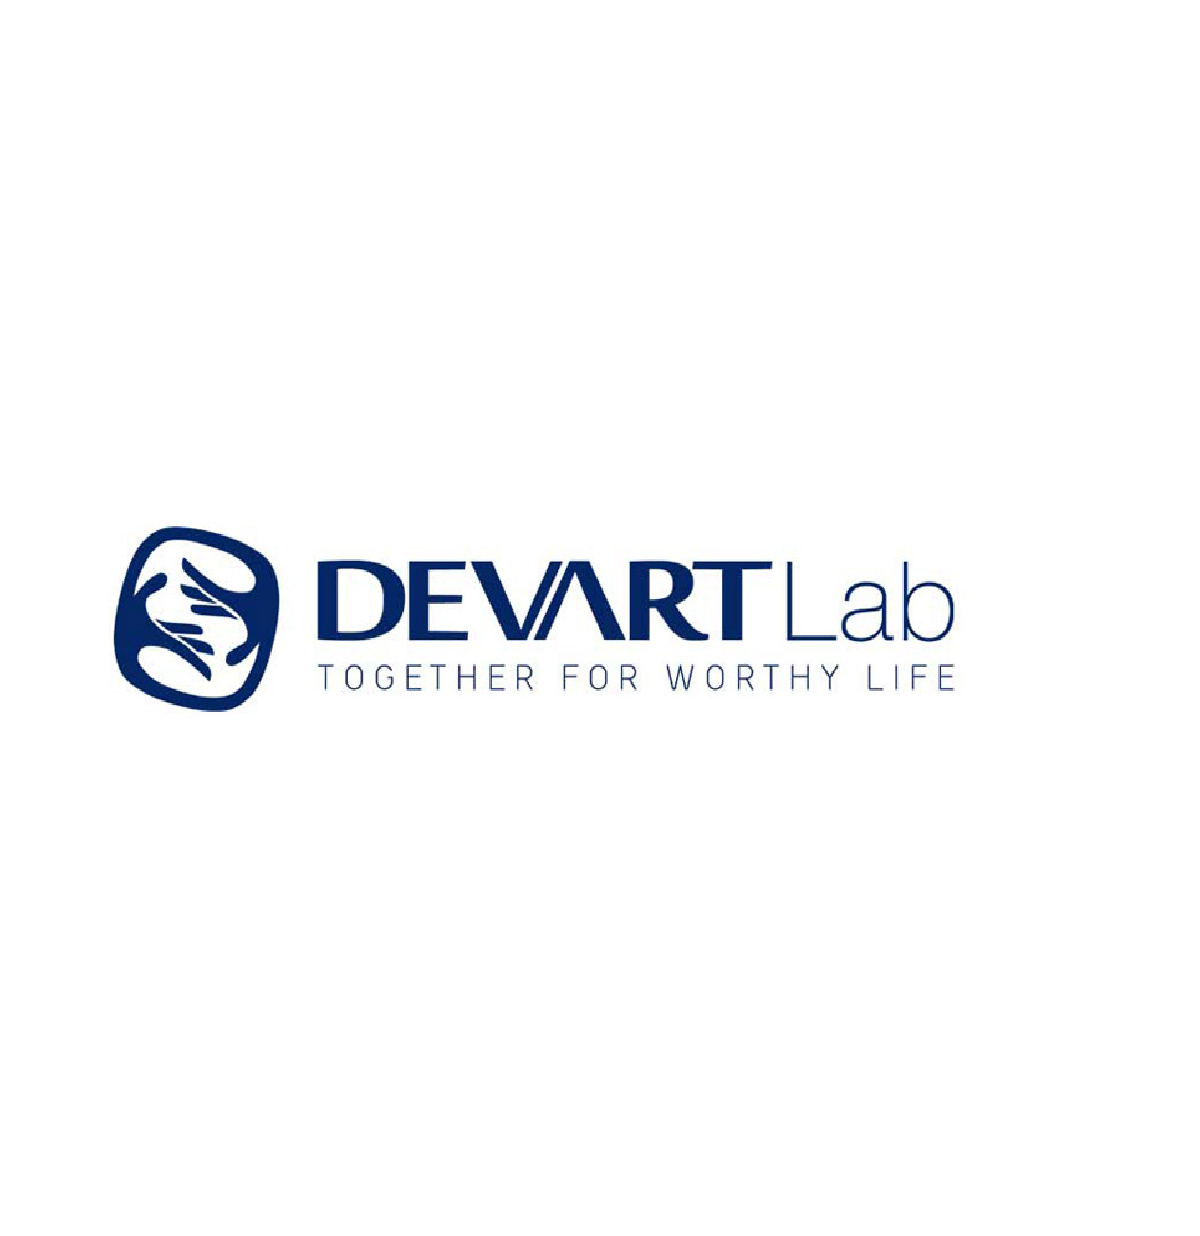 Devartlab pharmaceutical company